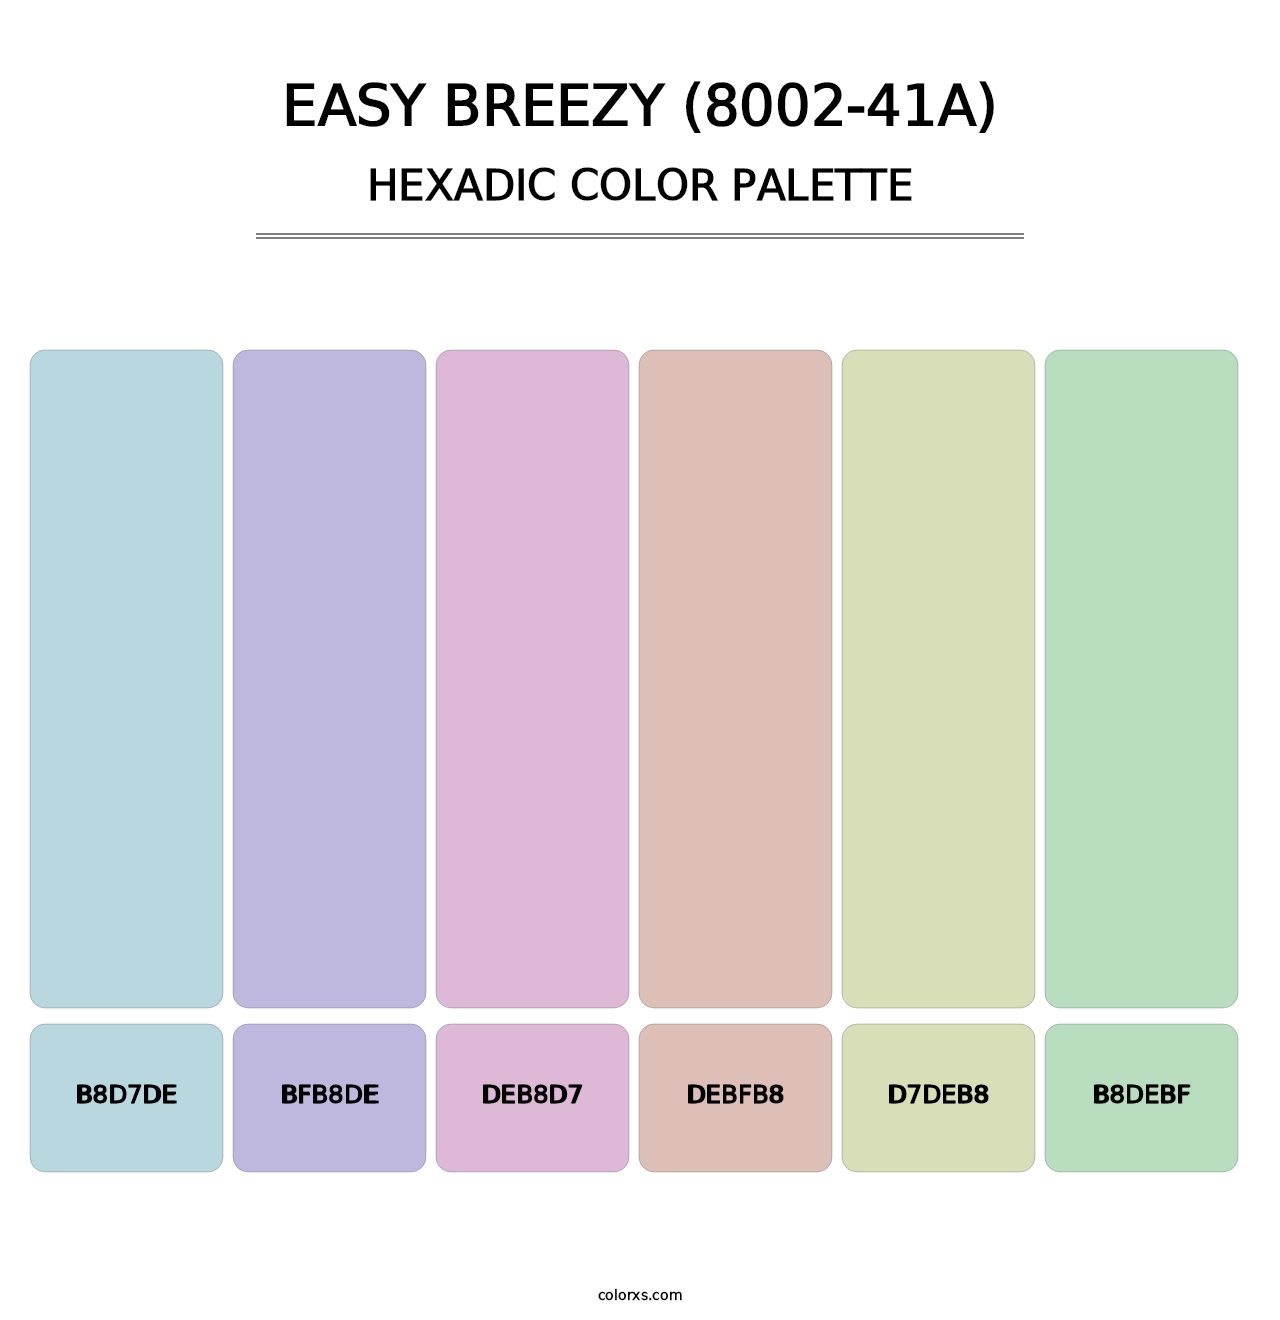 Easy Breezy (8002-41A) - Hexadic Color Palette